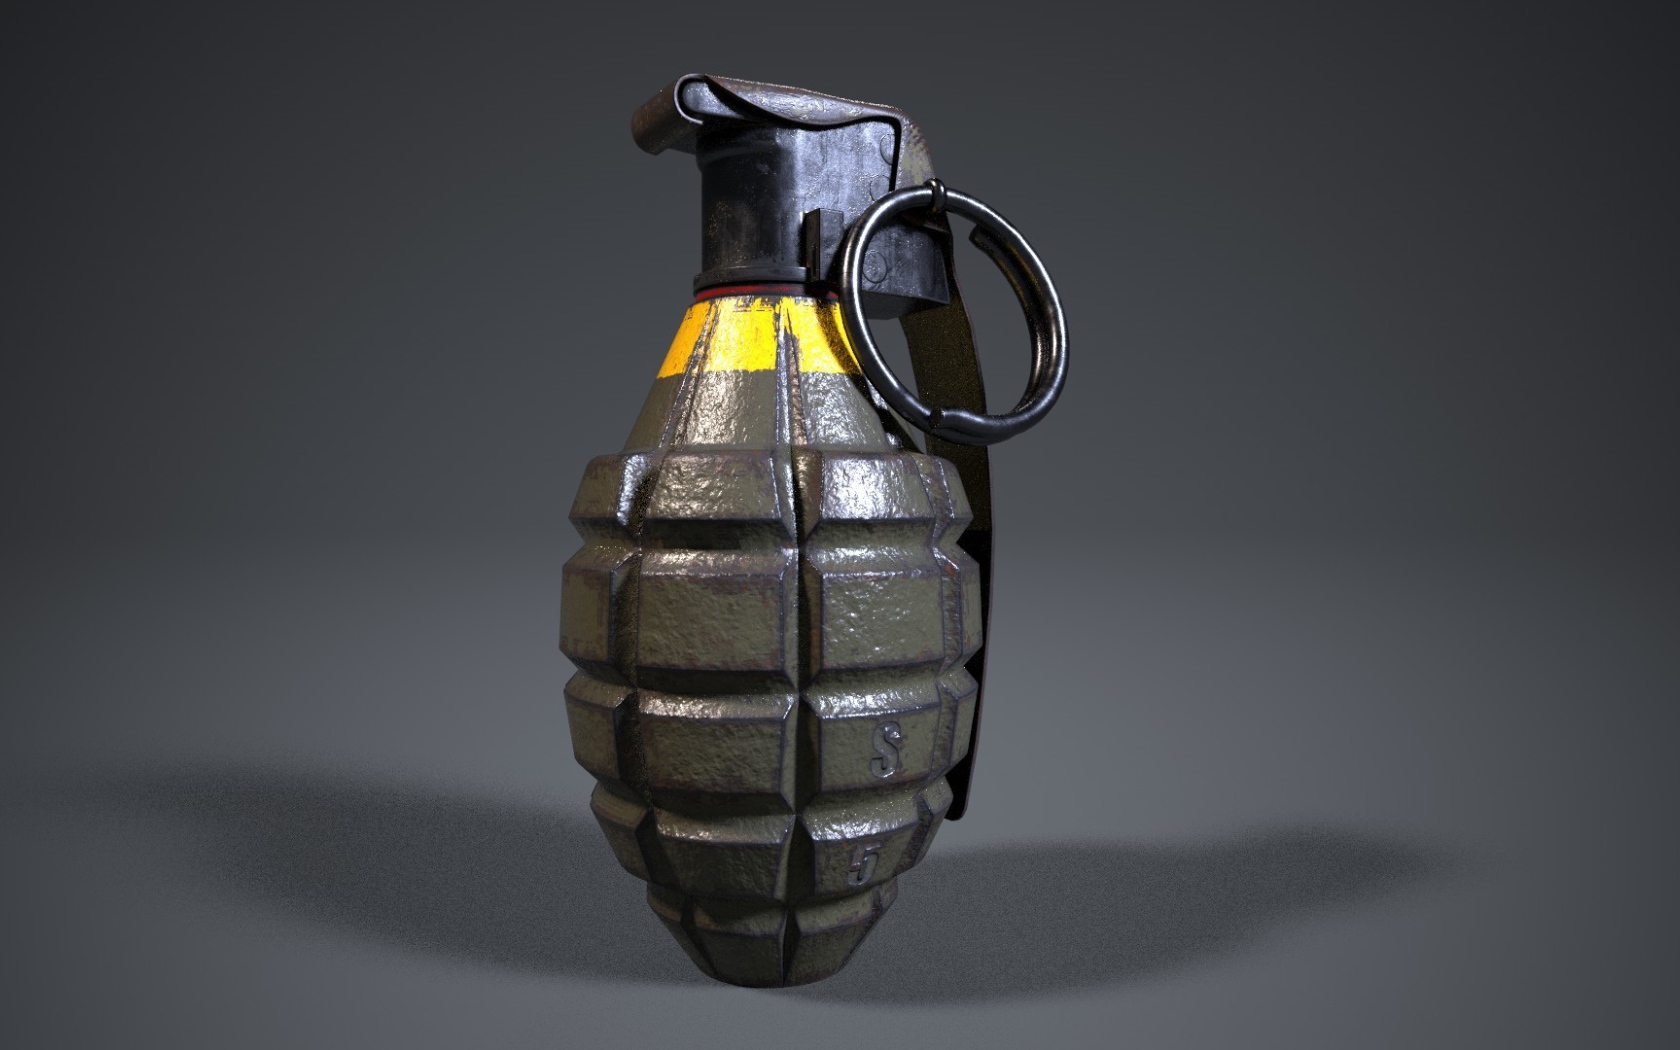 Grenade on gray background